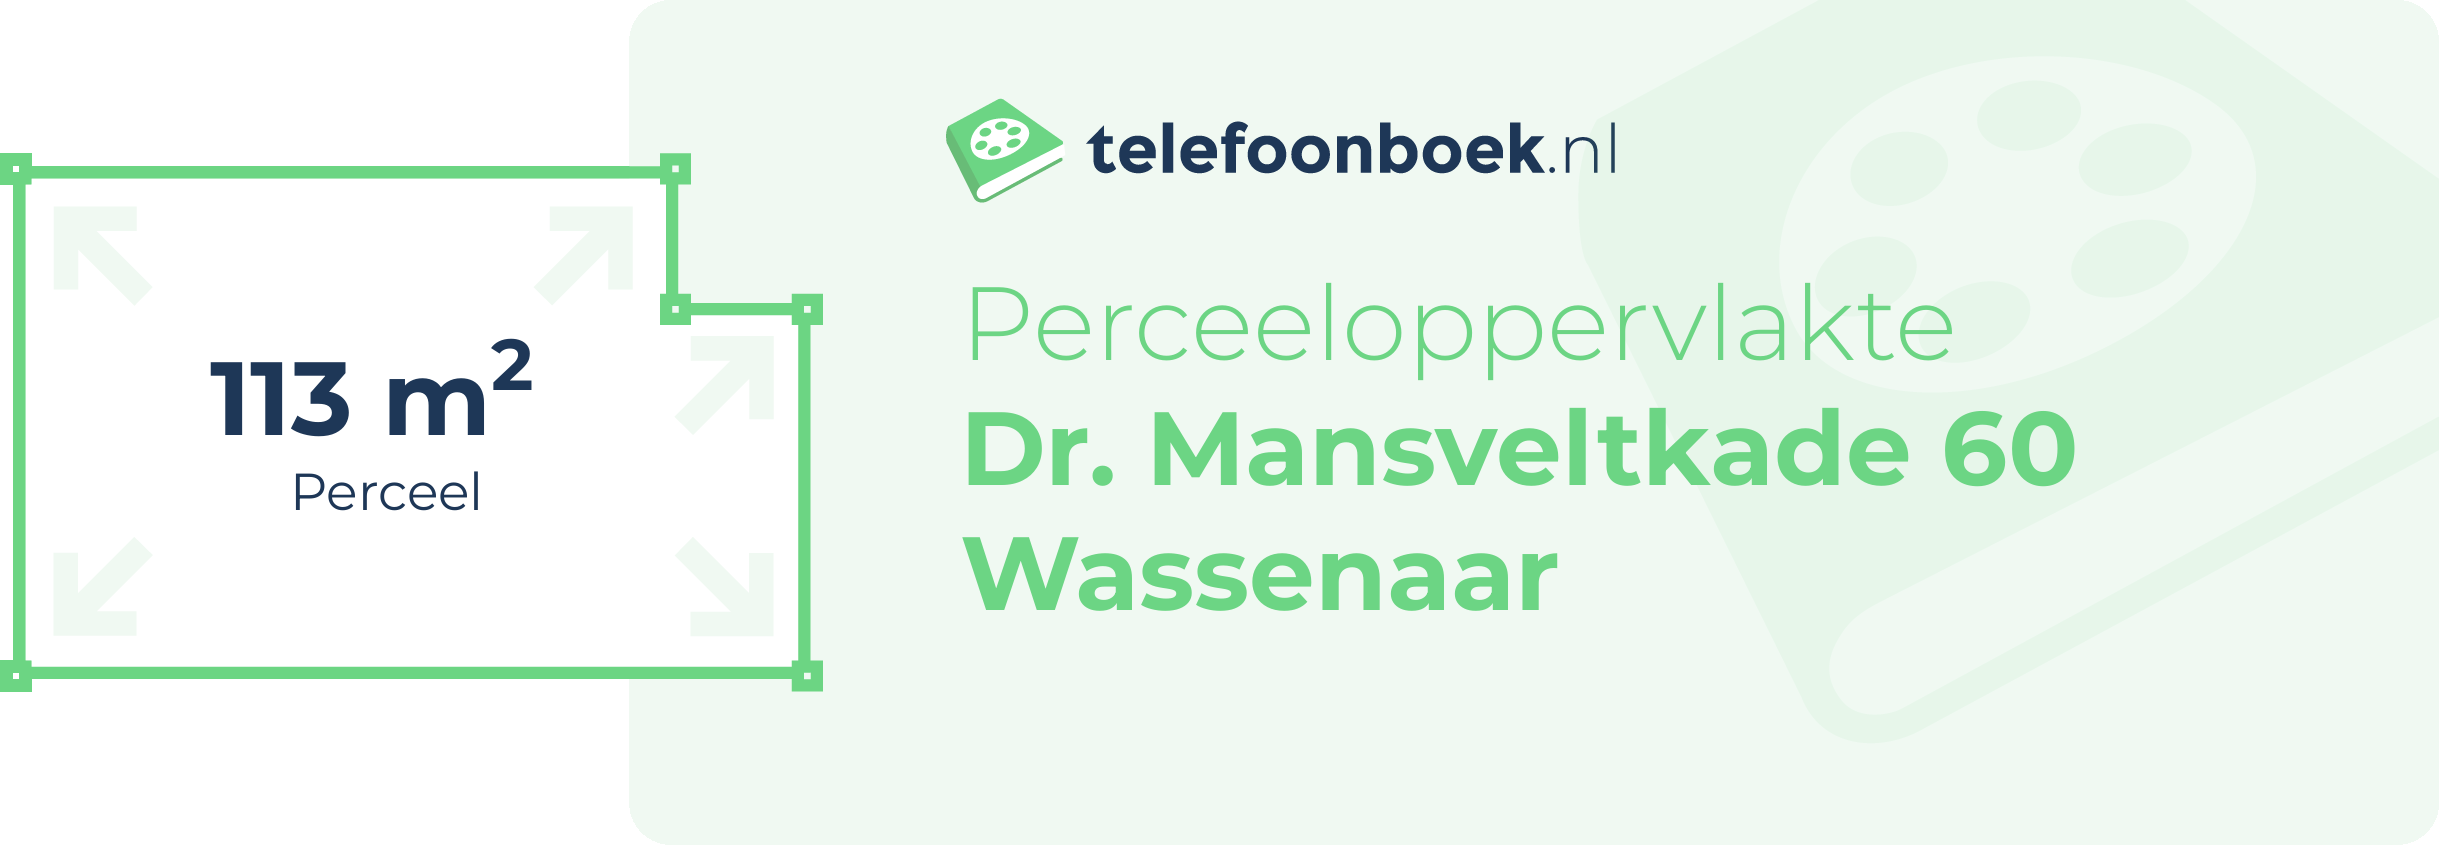 Perceeloppervlakte Dr. Mansveltkade 60 Wassenaar